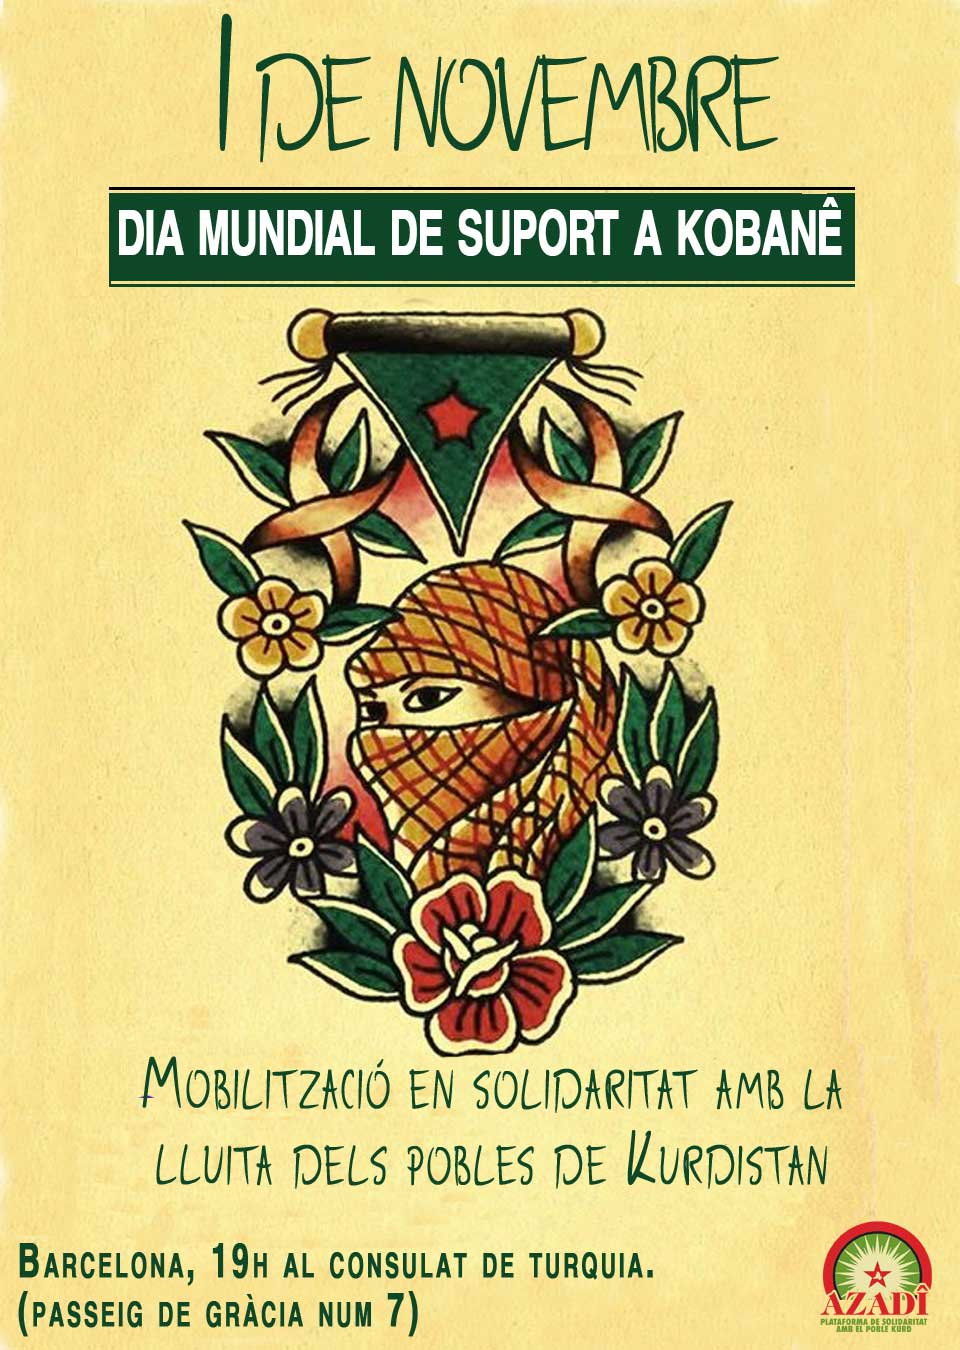 1 de Novembre: Dia mundial de suport a Kobane